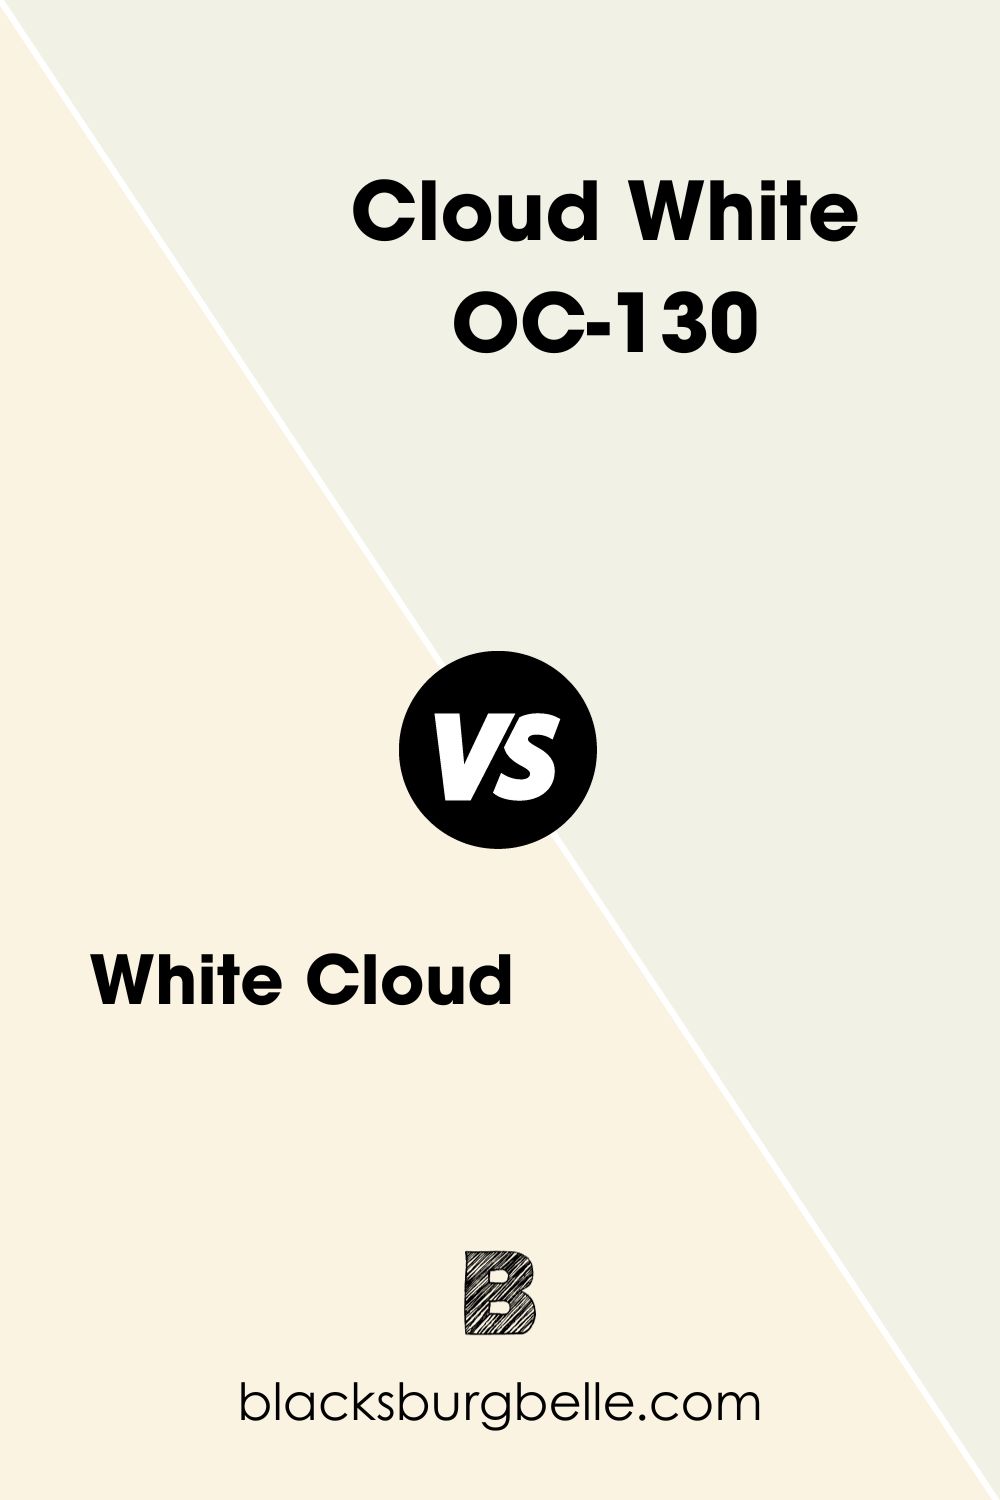 Cloud White OC-130 (8)